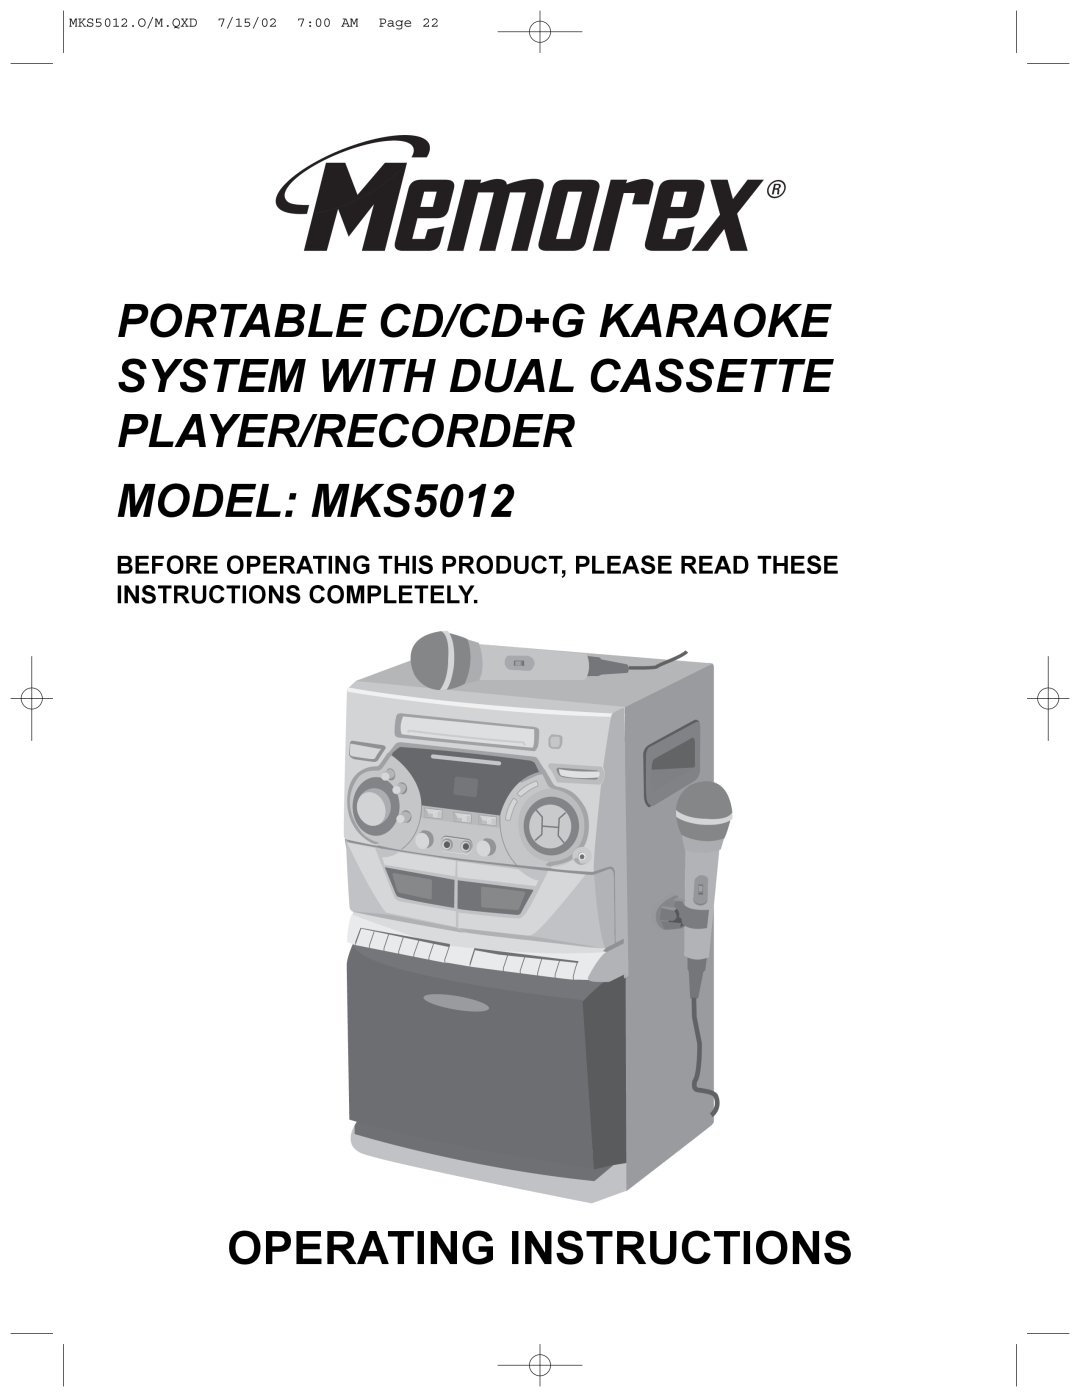 Memorex manual MODEL: MKS5012, Operating Instructions, MKS5012.O/M.QXD 7/15/02 7 00 AM Page 